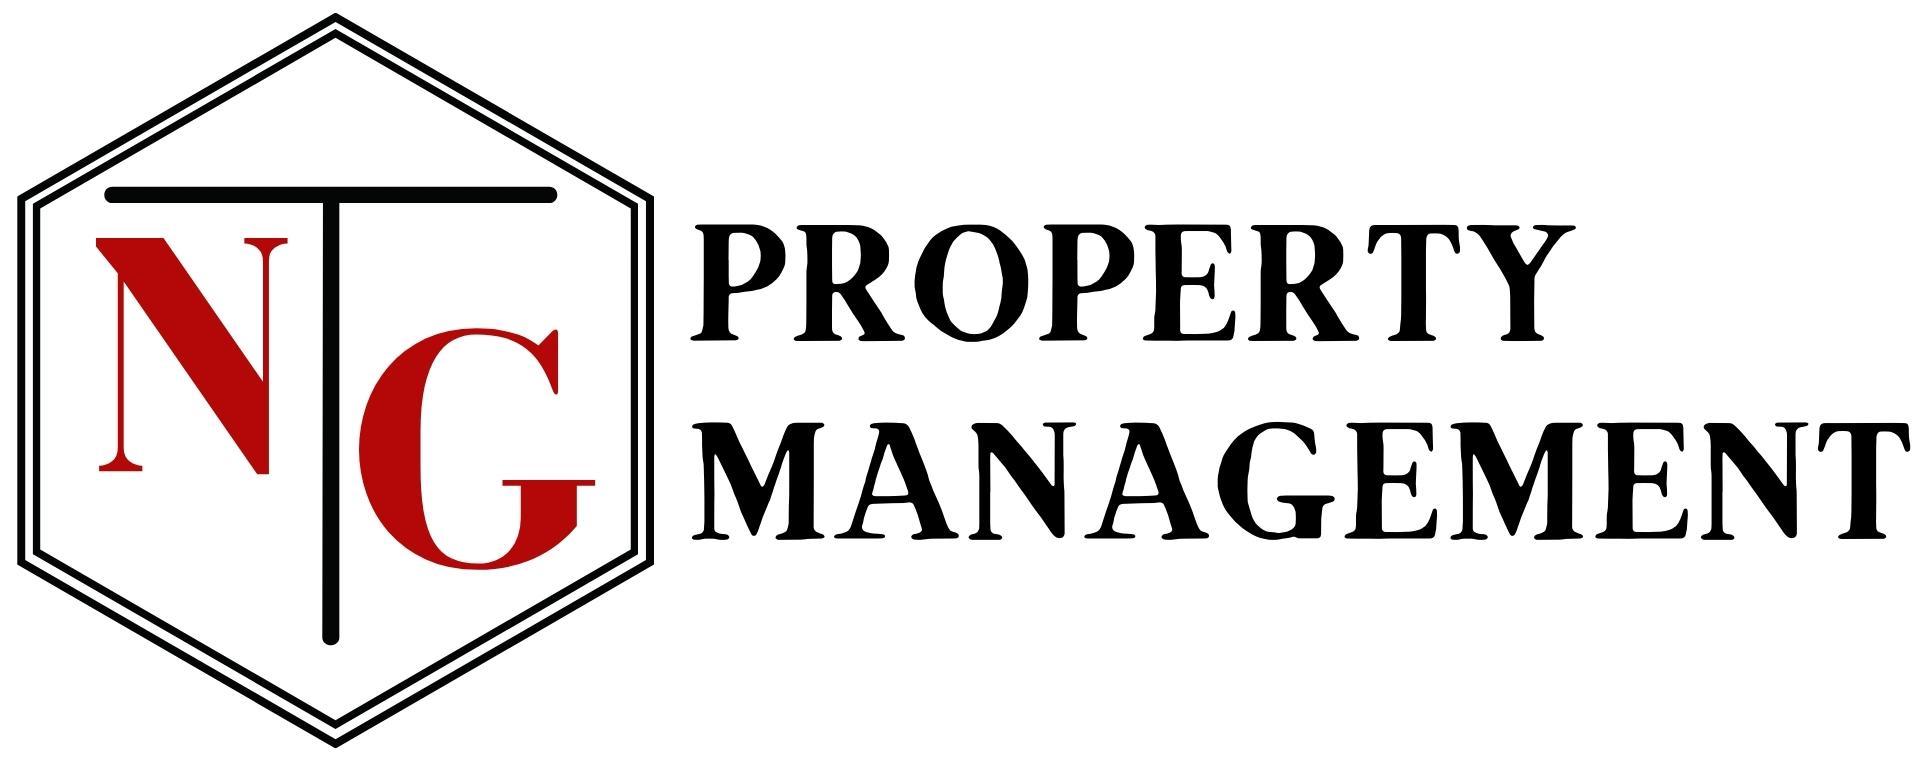 TNG Property Management logo